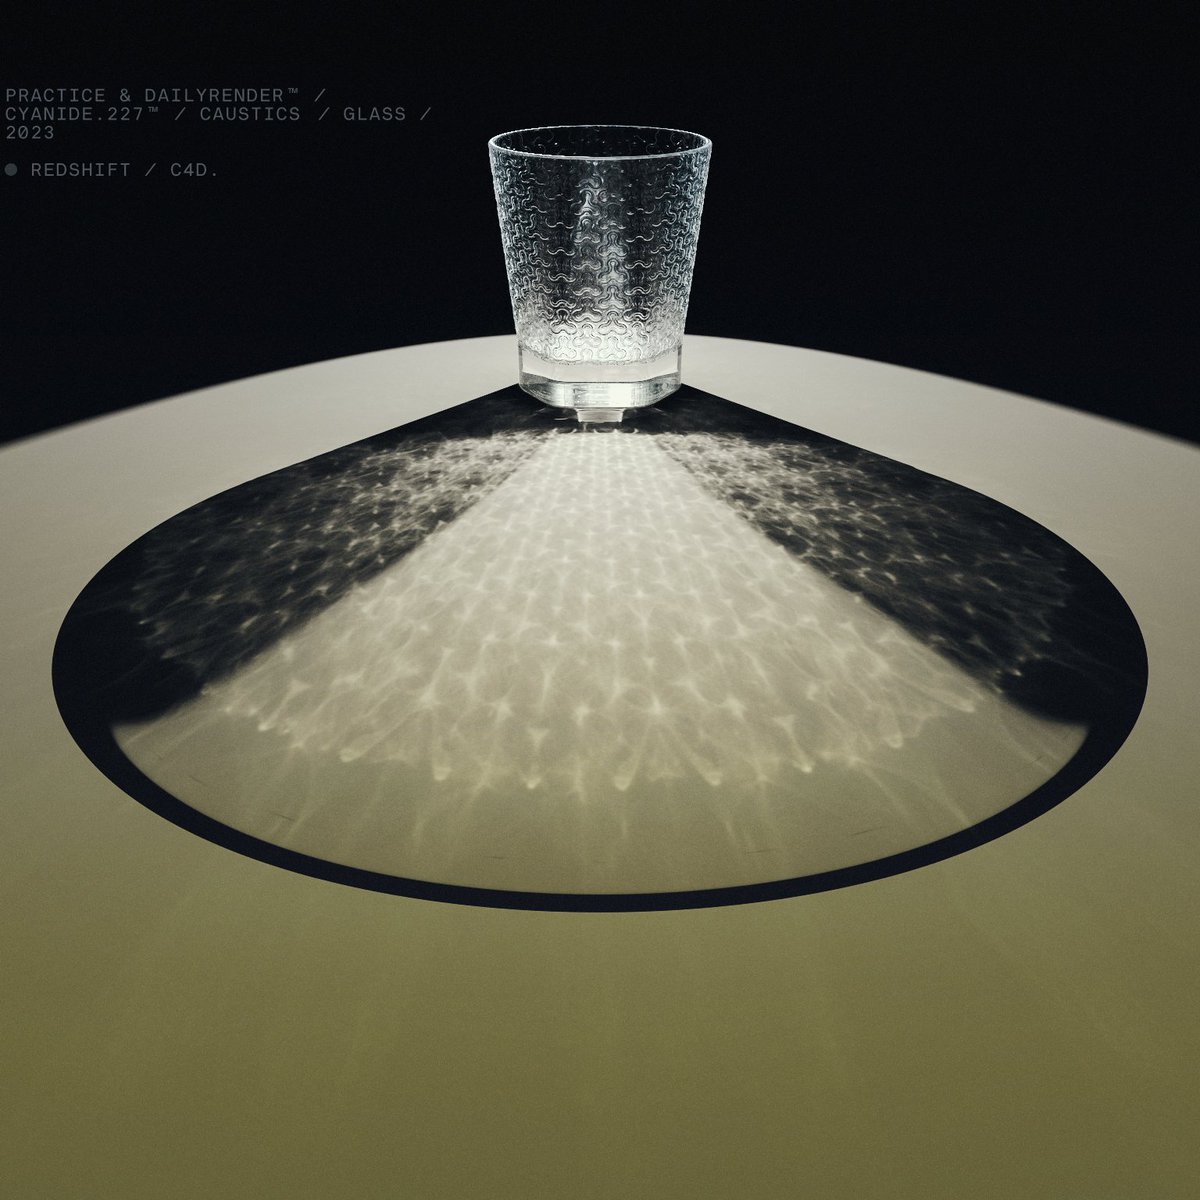 Glass Experiments 
(Caustics with Displacement method)
Redshift / C4D
.
#redshift #maxon #cinema4d #glass #studies #displacement #render #cgi #3d #royalglass #caustics #studioshot